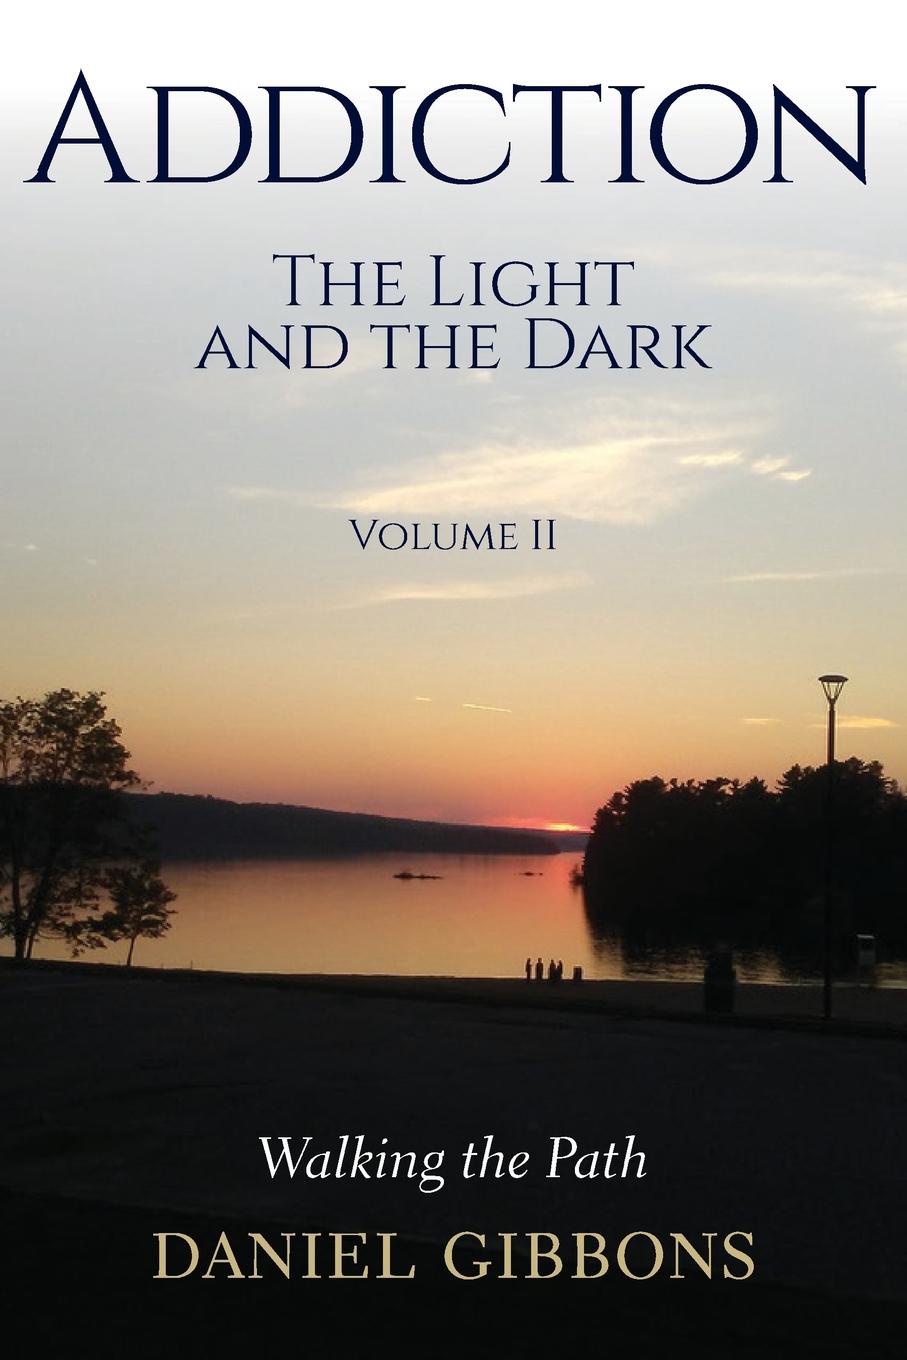 Addiction The Light and the Dark. Volume II